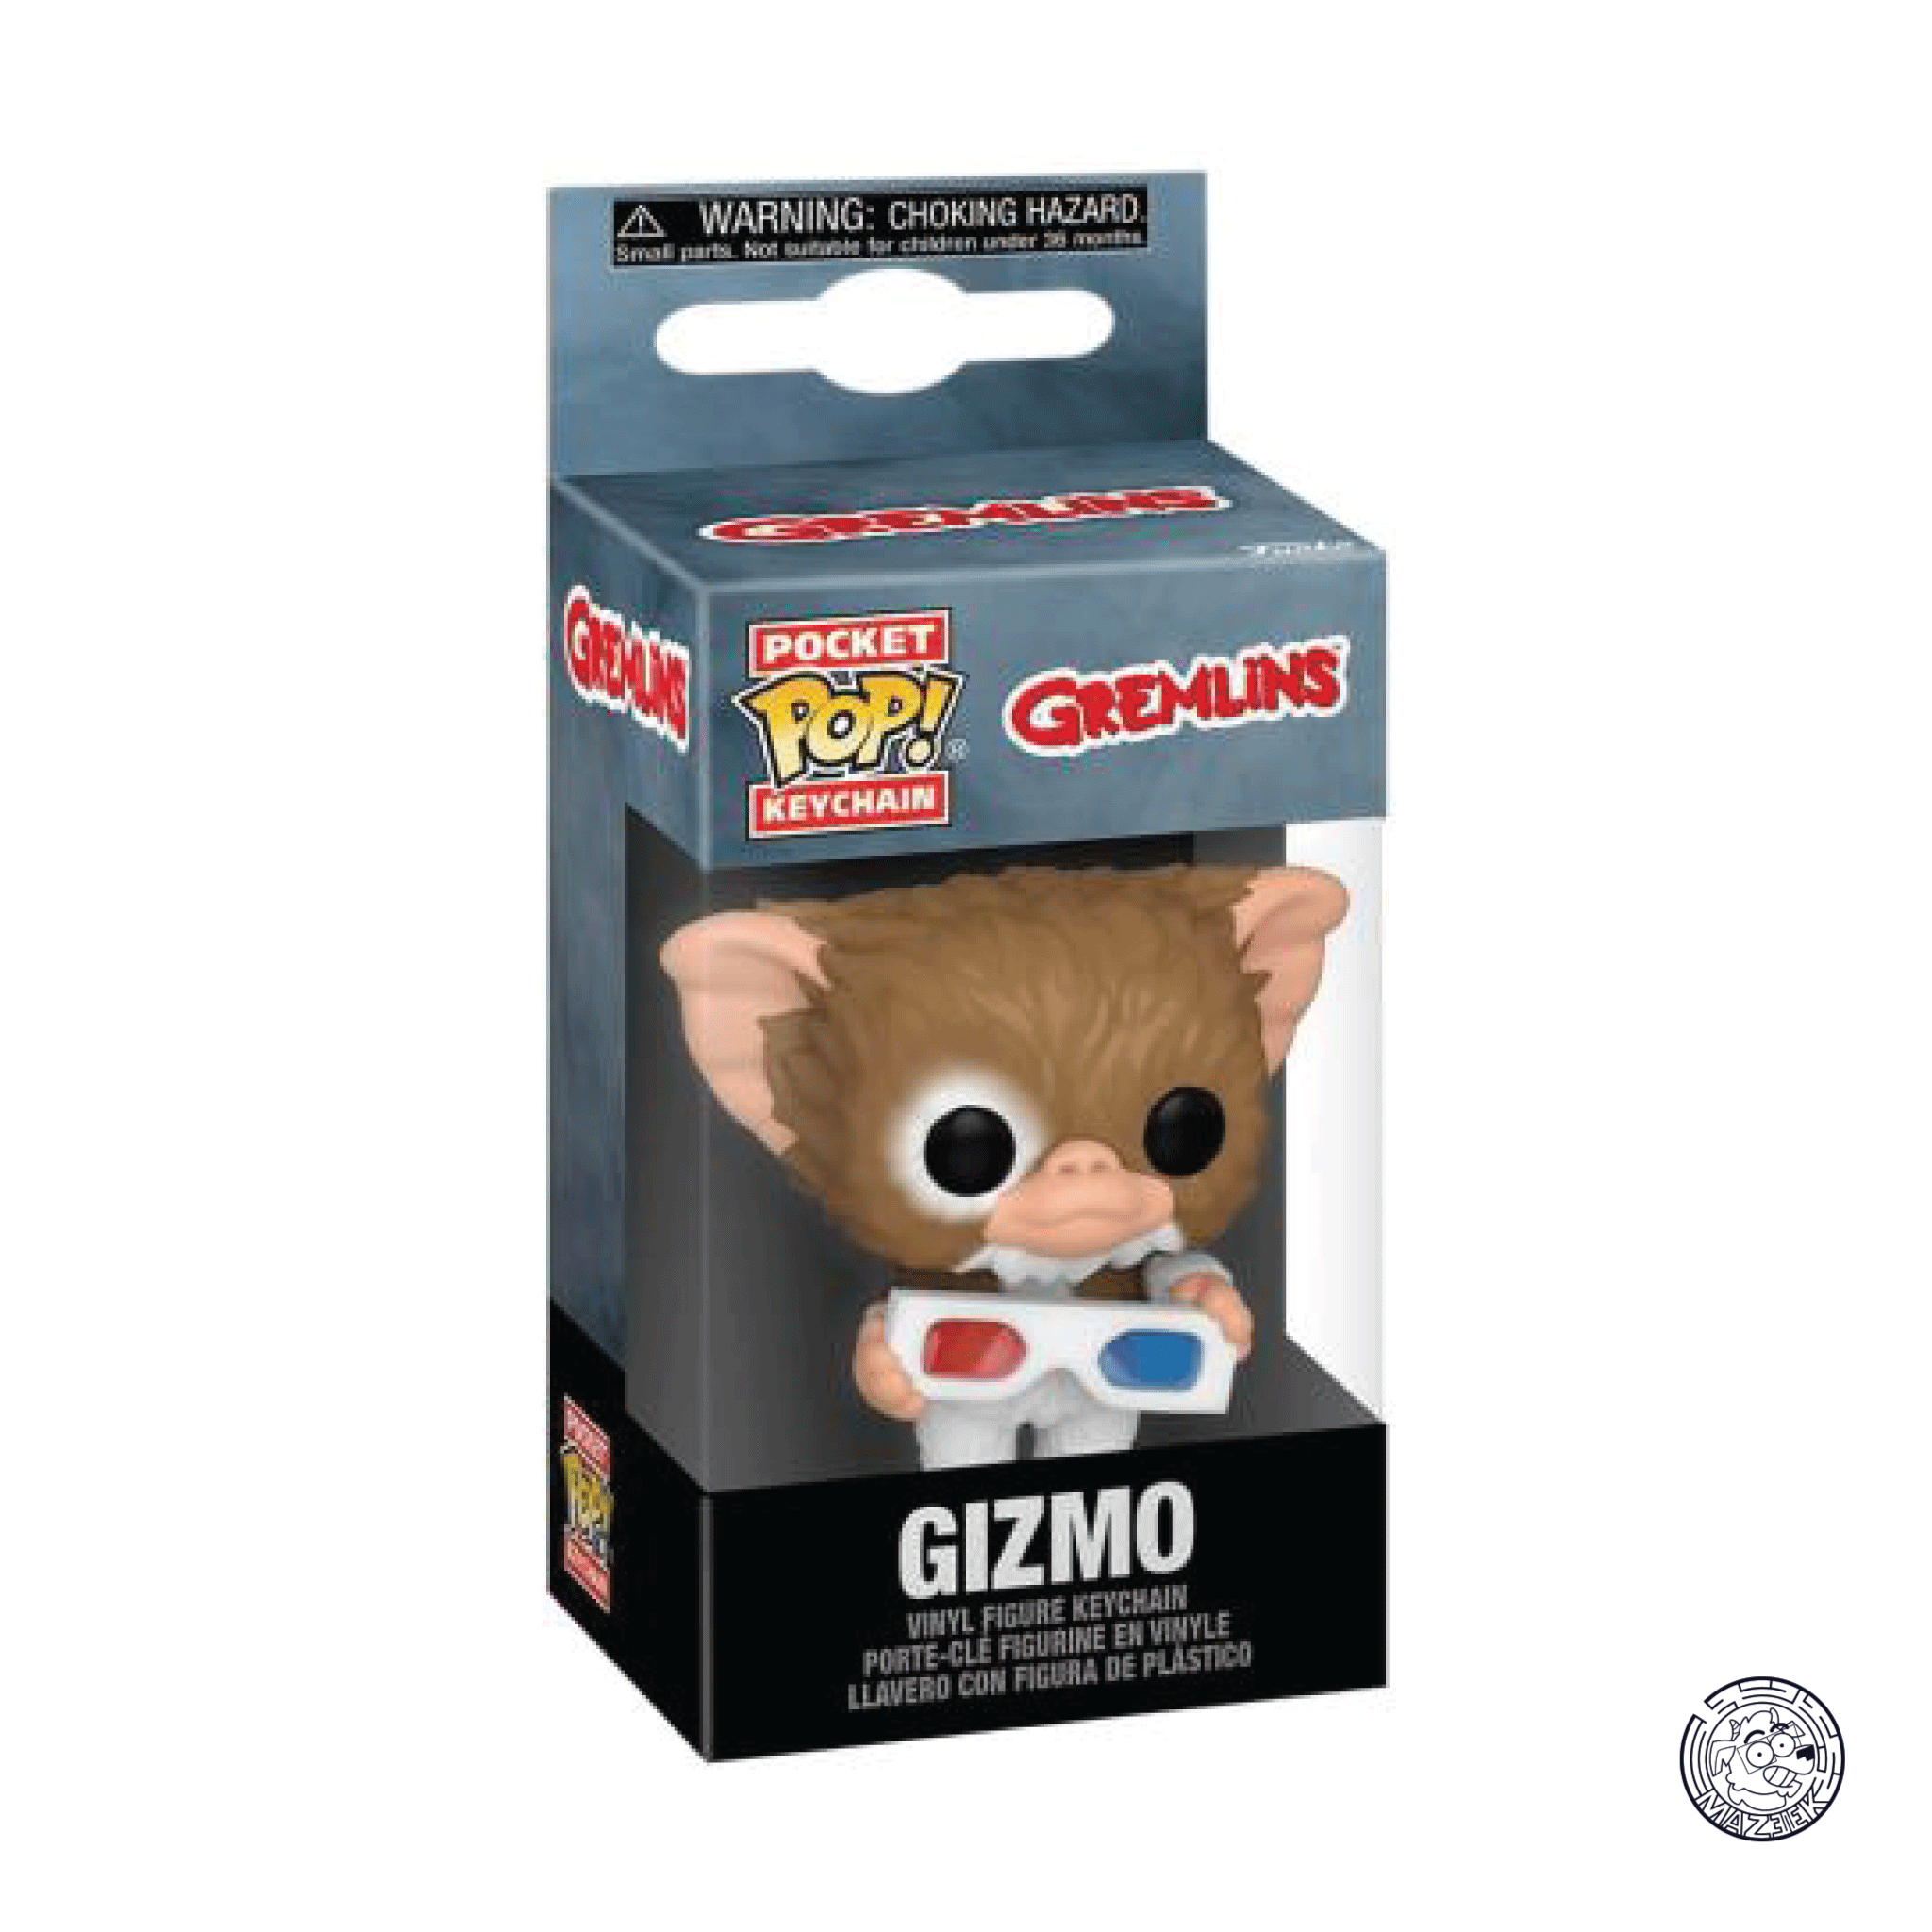 Pocket POP! Gremlins Keychain: Gizmo